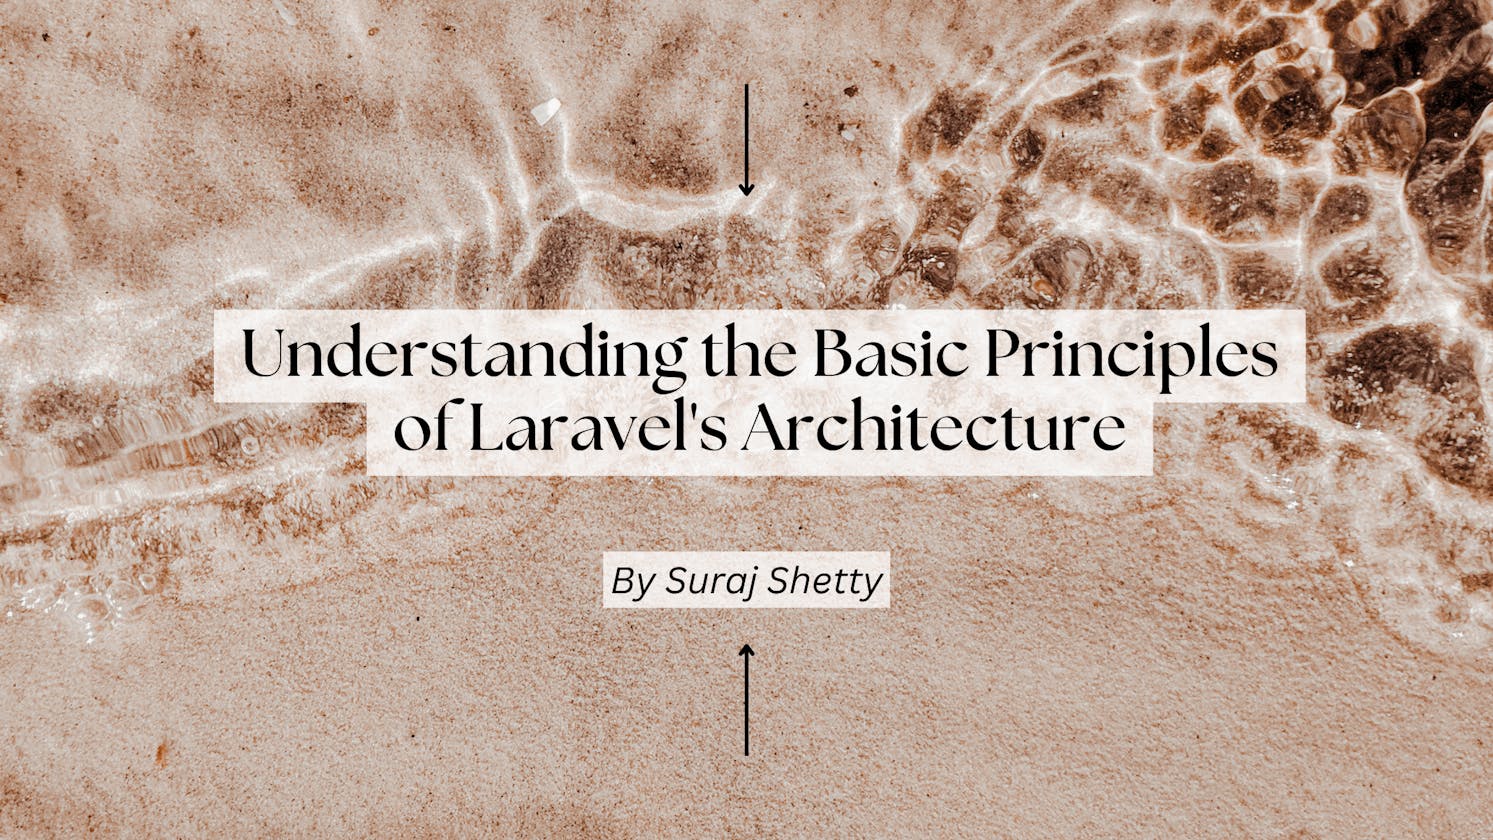 Understanding the Basic Principles of Laravel's Architecture